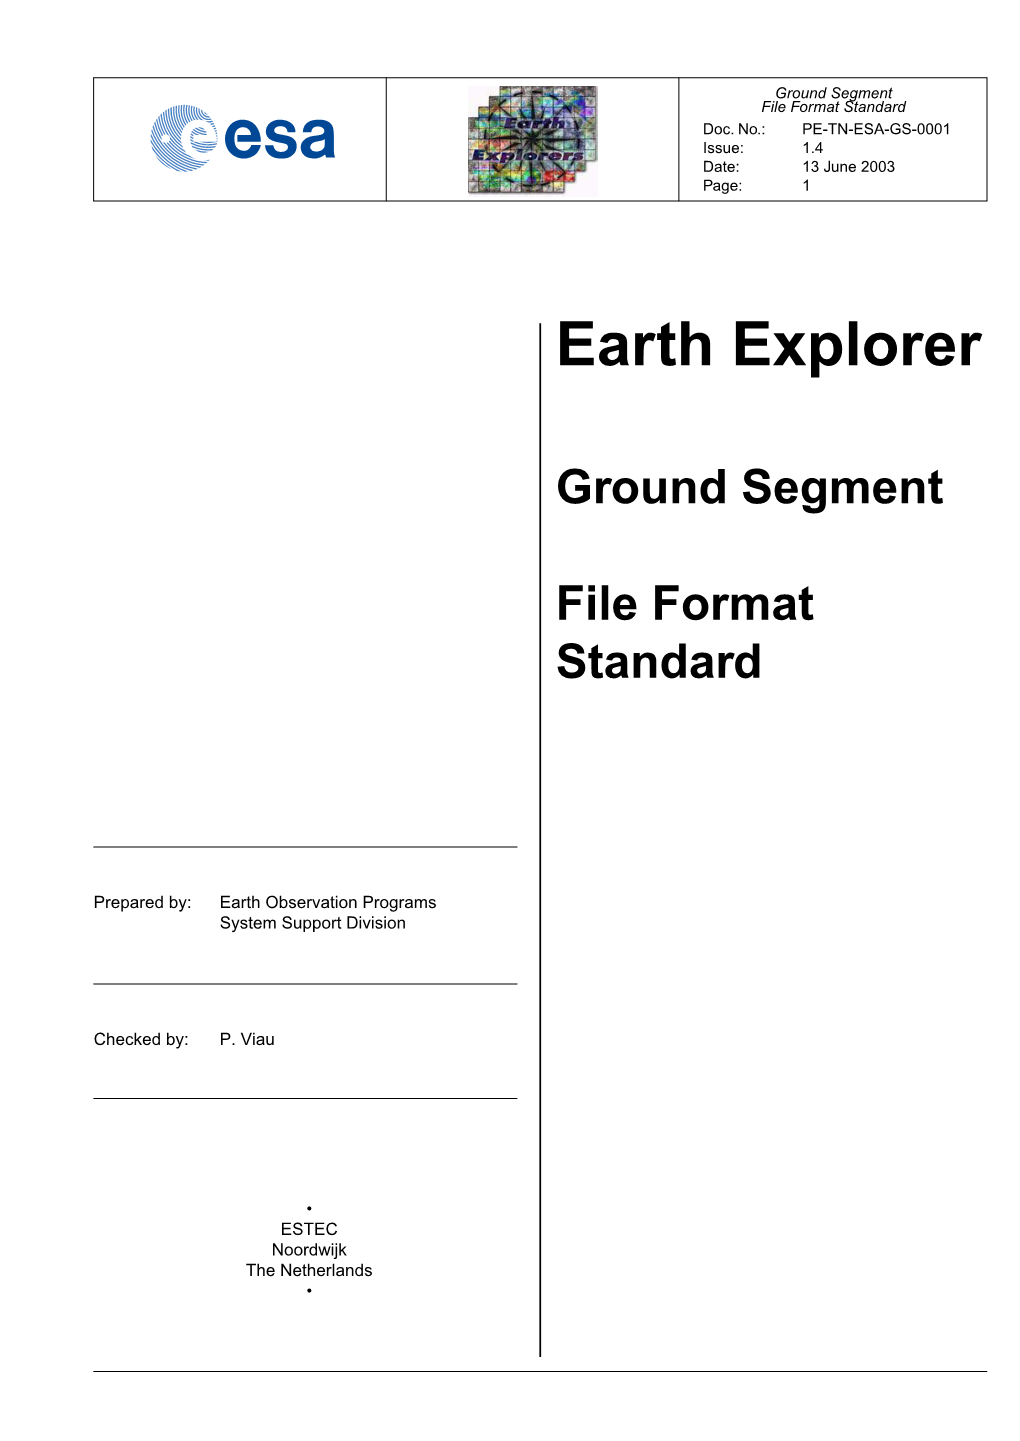 Earth Explorer Ground Segment File Format Standard